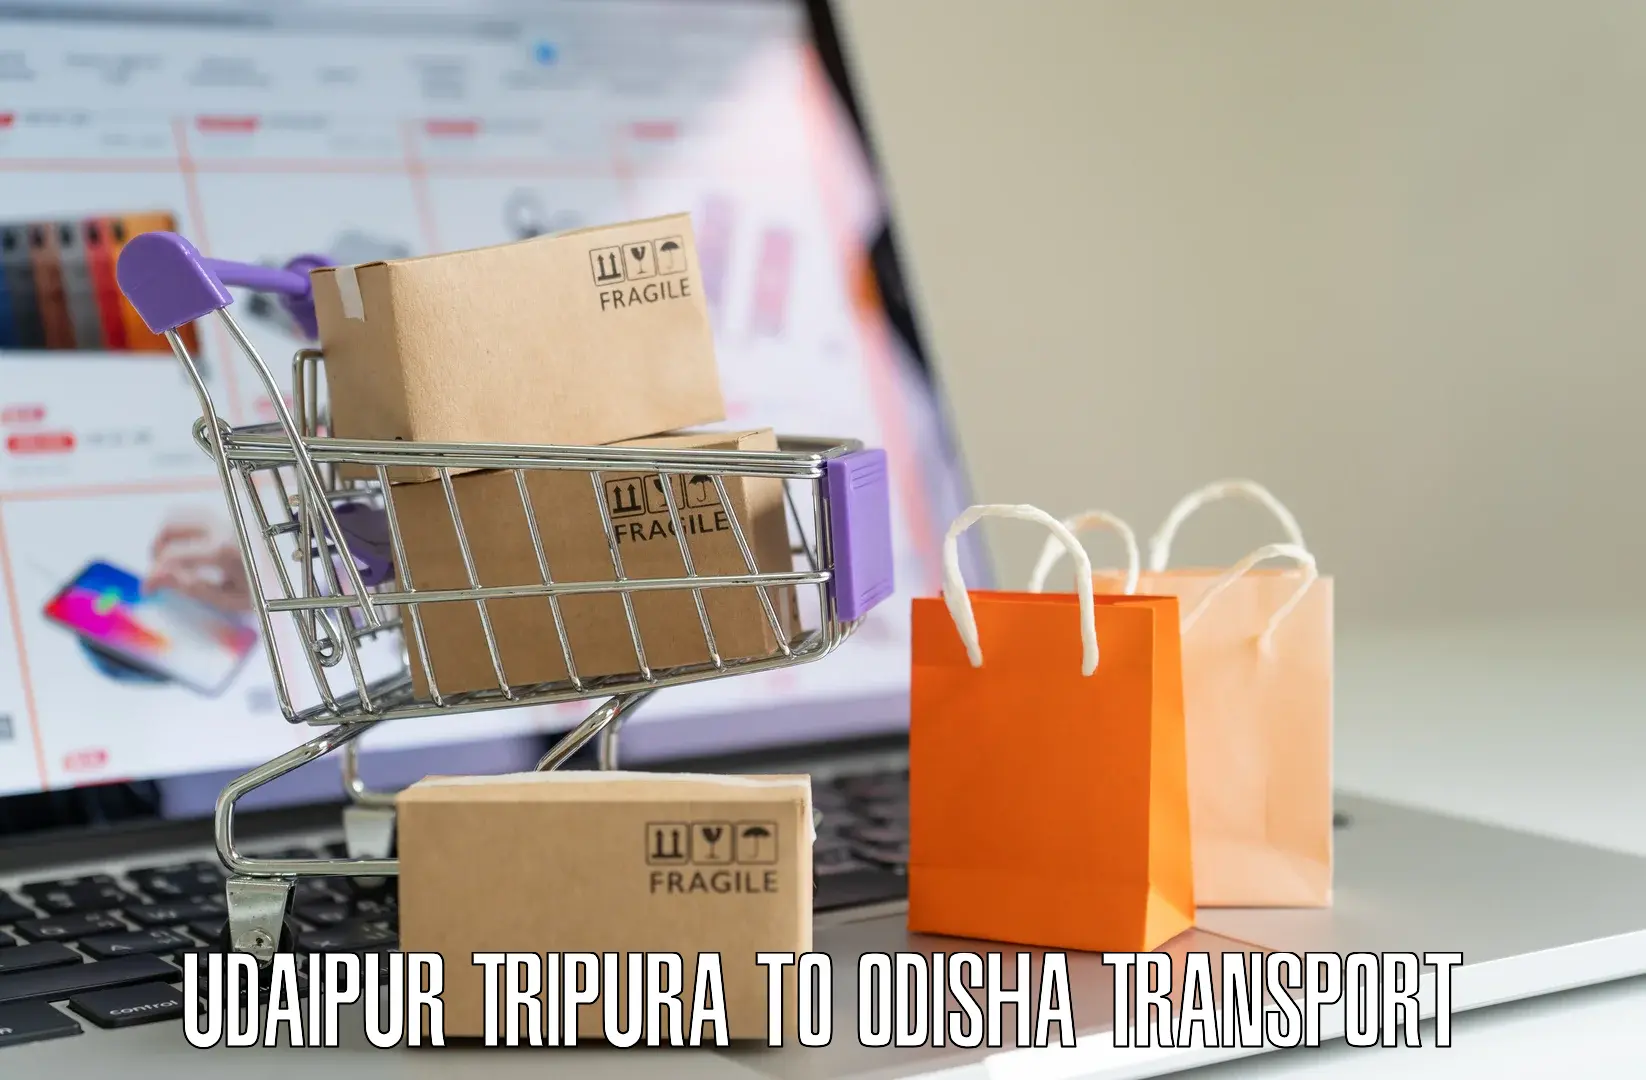 Express transport services Udaipur Tripura to Bhuban